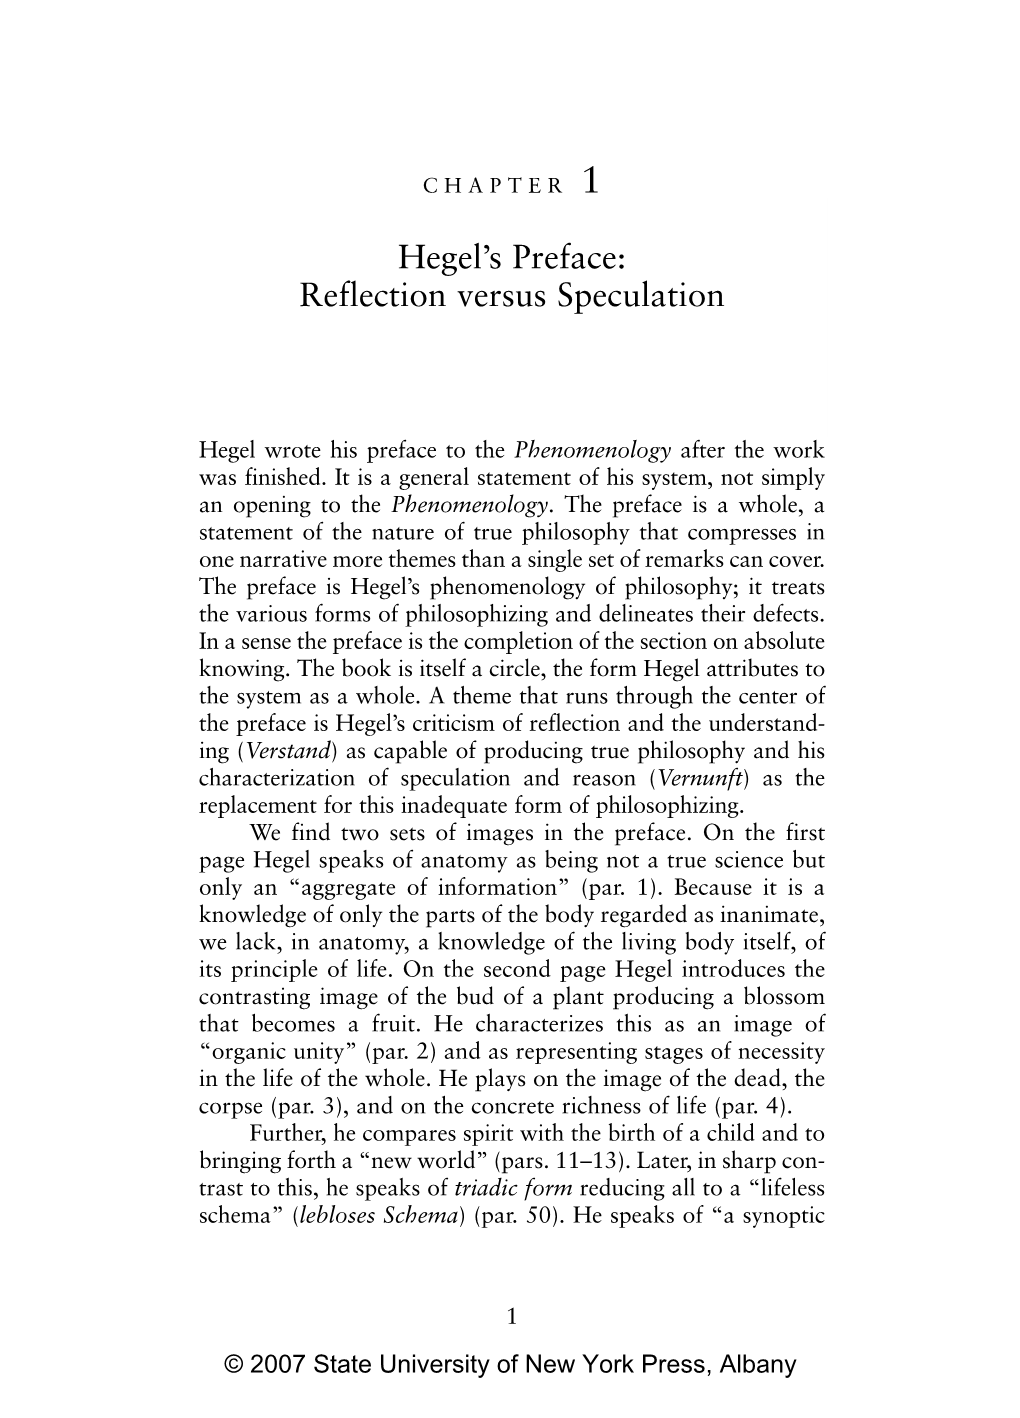 Hegel's Preface: Reflection Versus Speculation